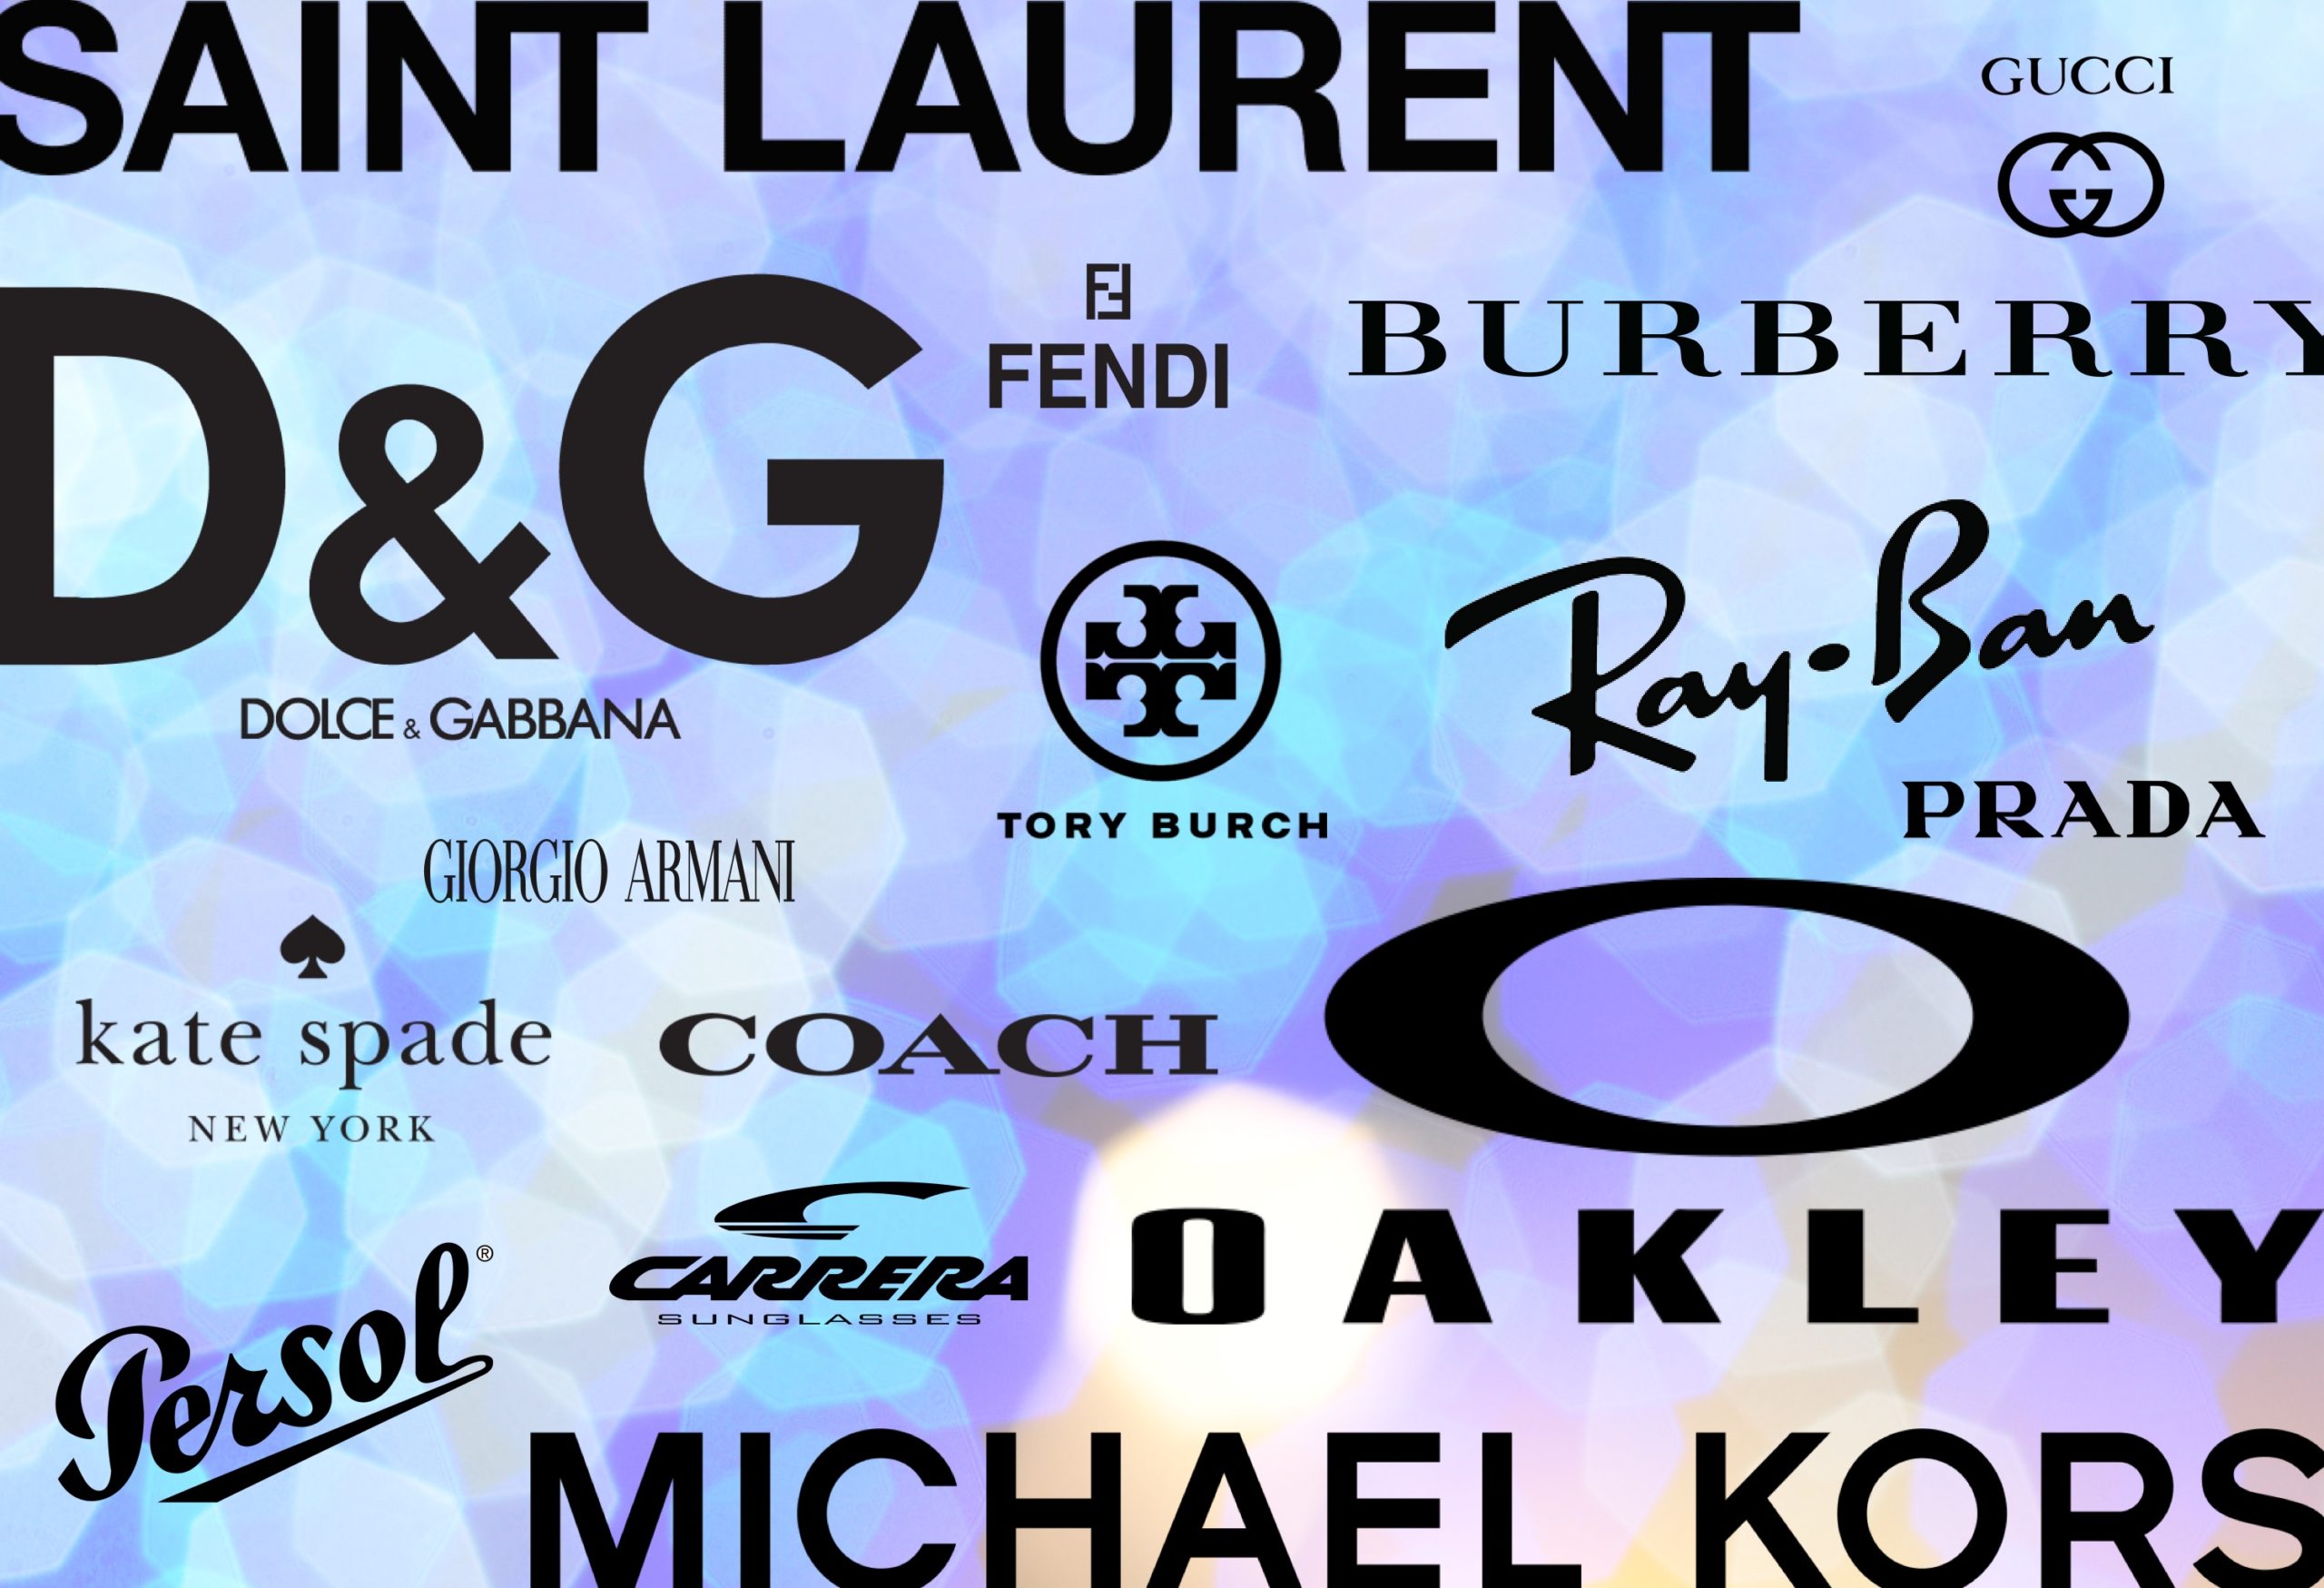 Top 5 Chanel Sunglasses – Fashion Eyewear US